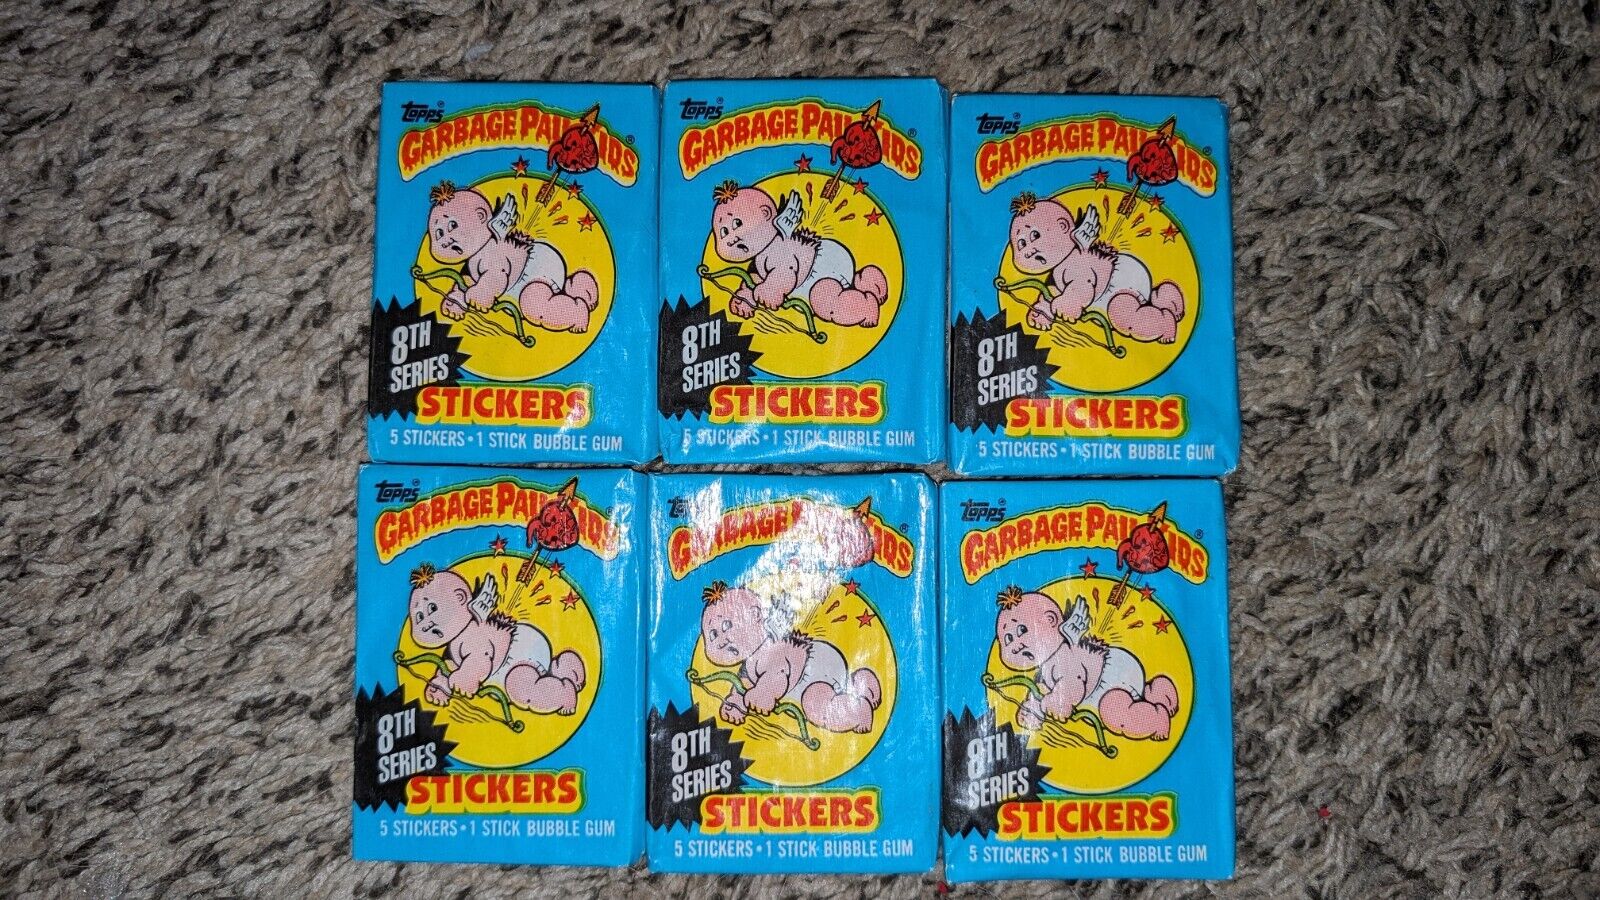 1987 Topps Garbage Pail Kids 8th Series Unopened Wax Pack 